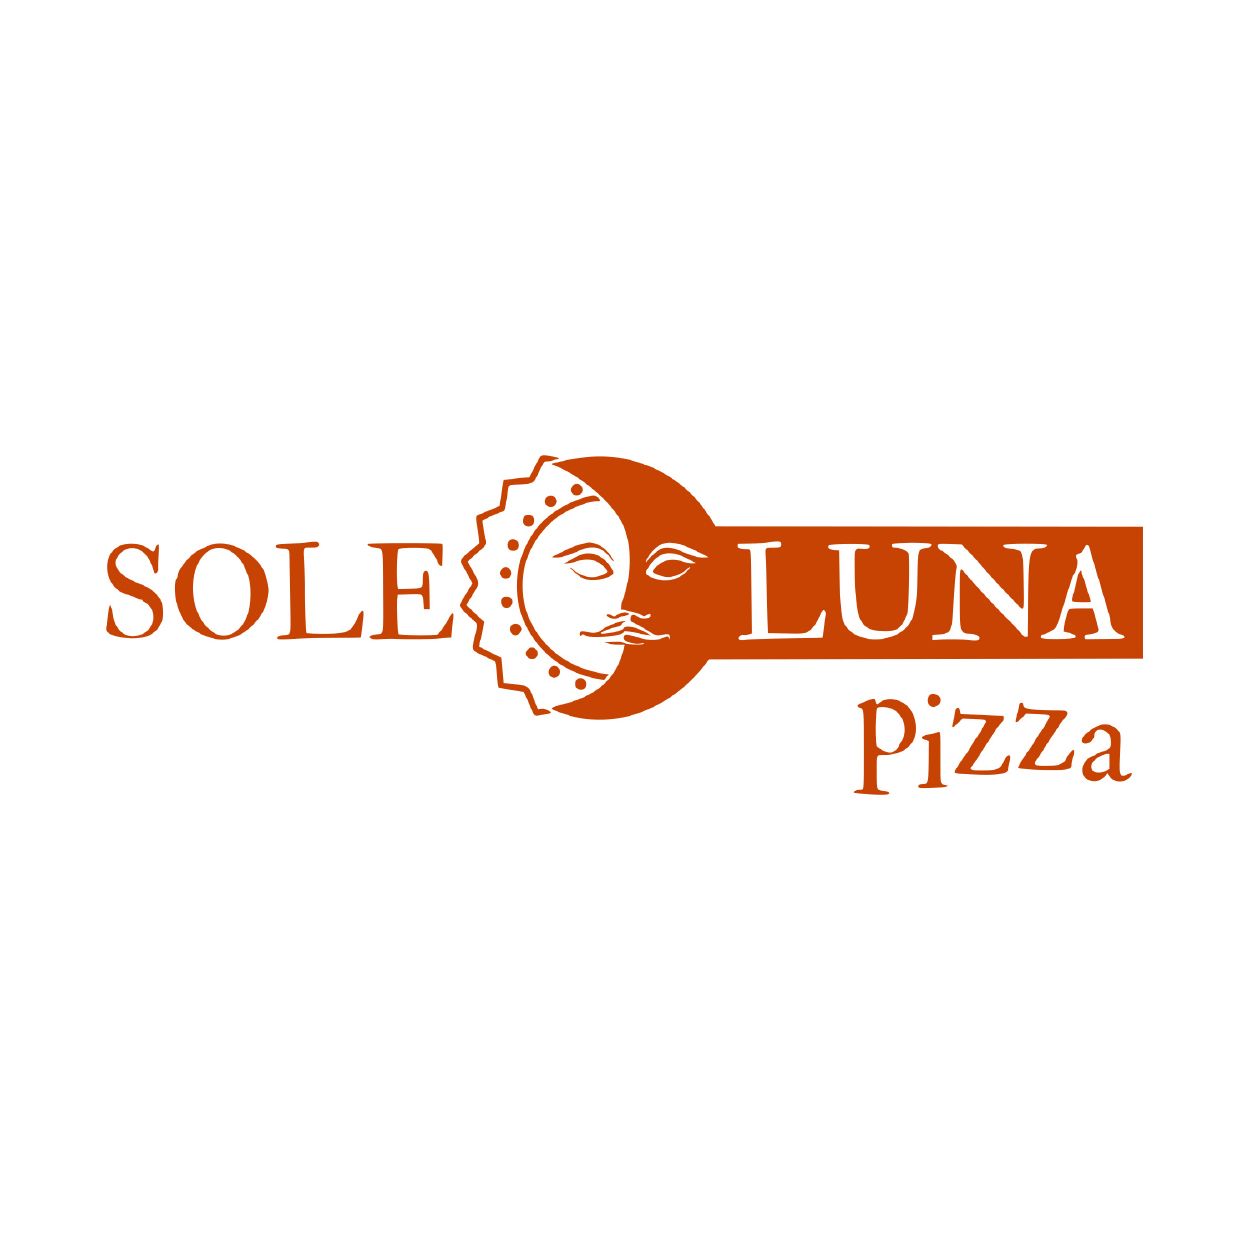 Soleluna Pizza Franchising Ltd